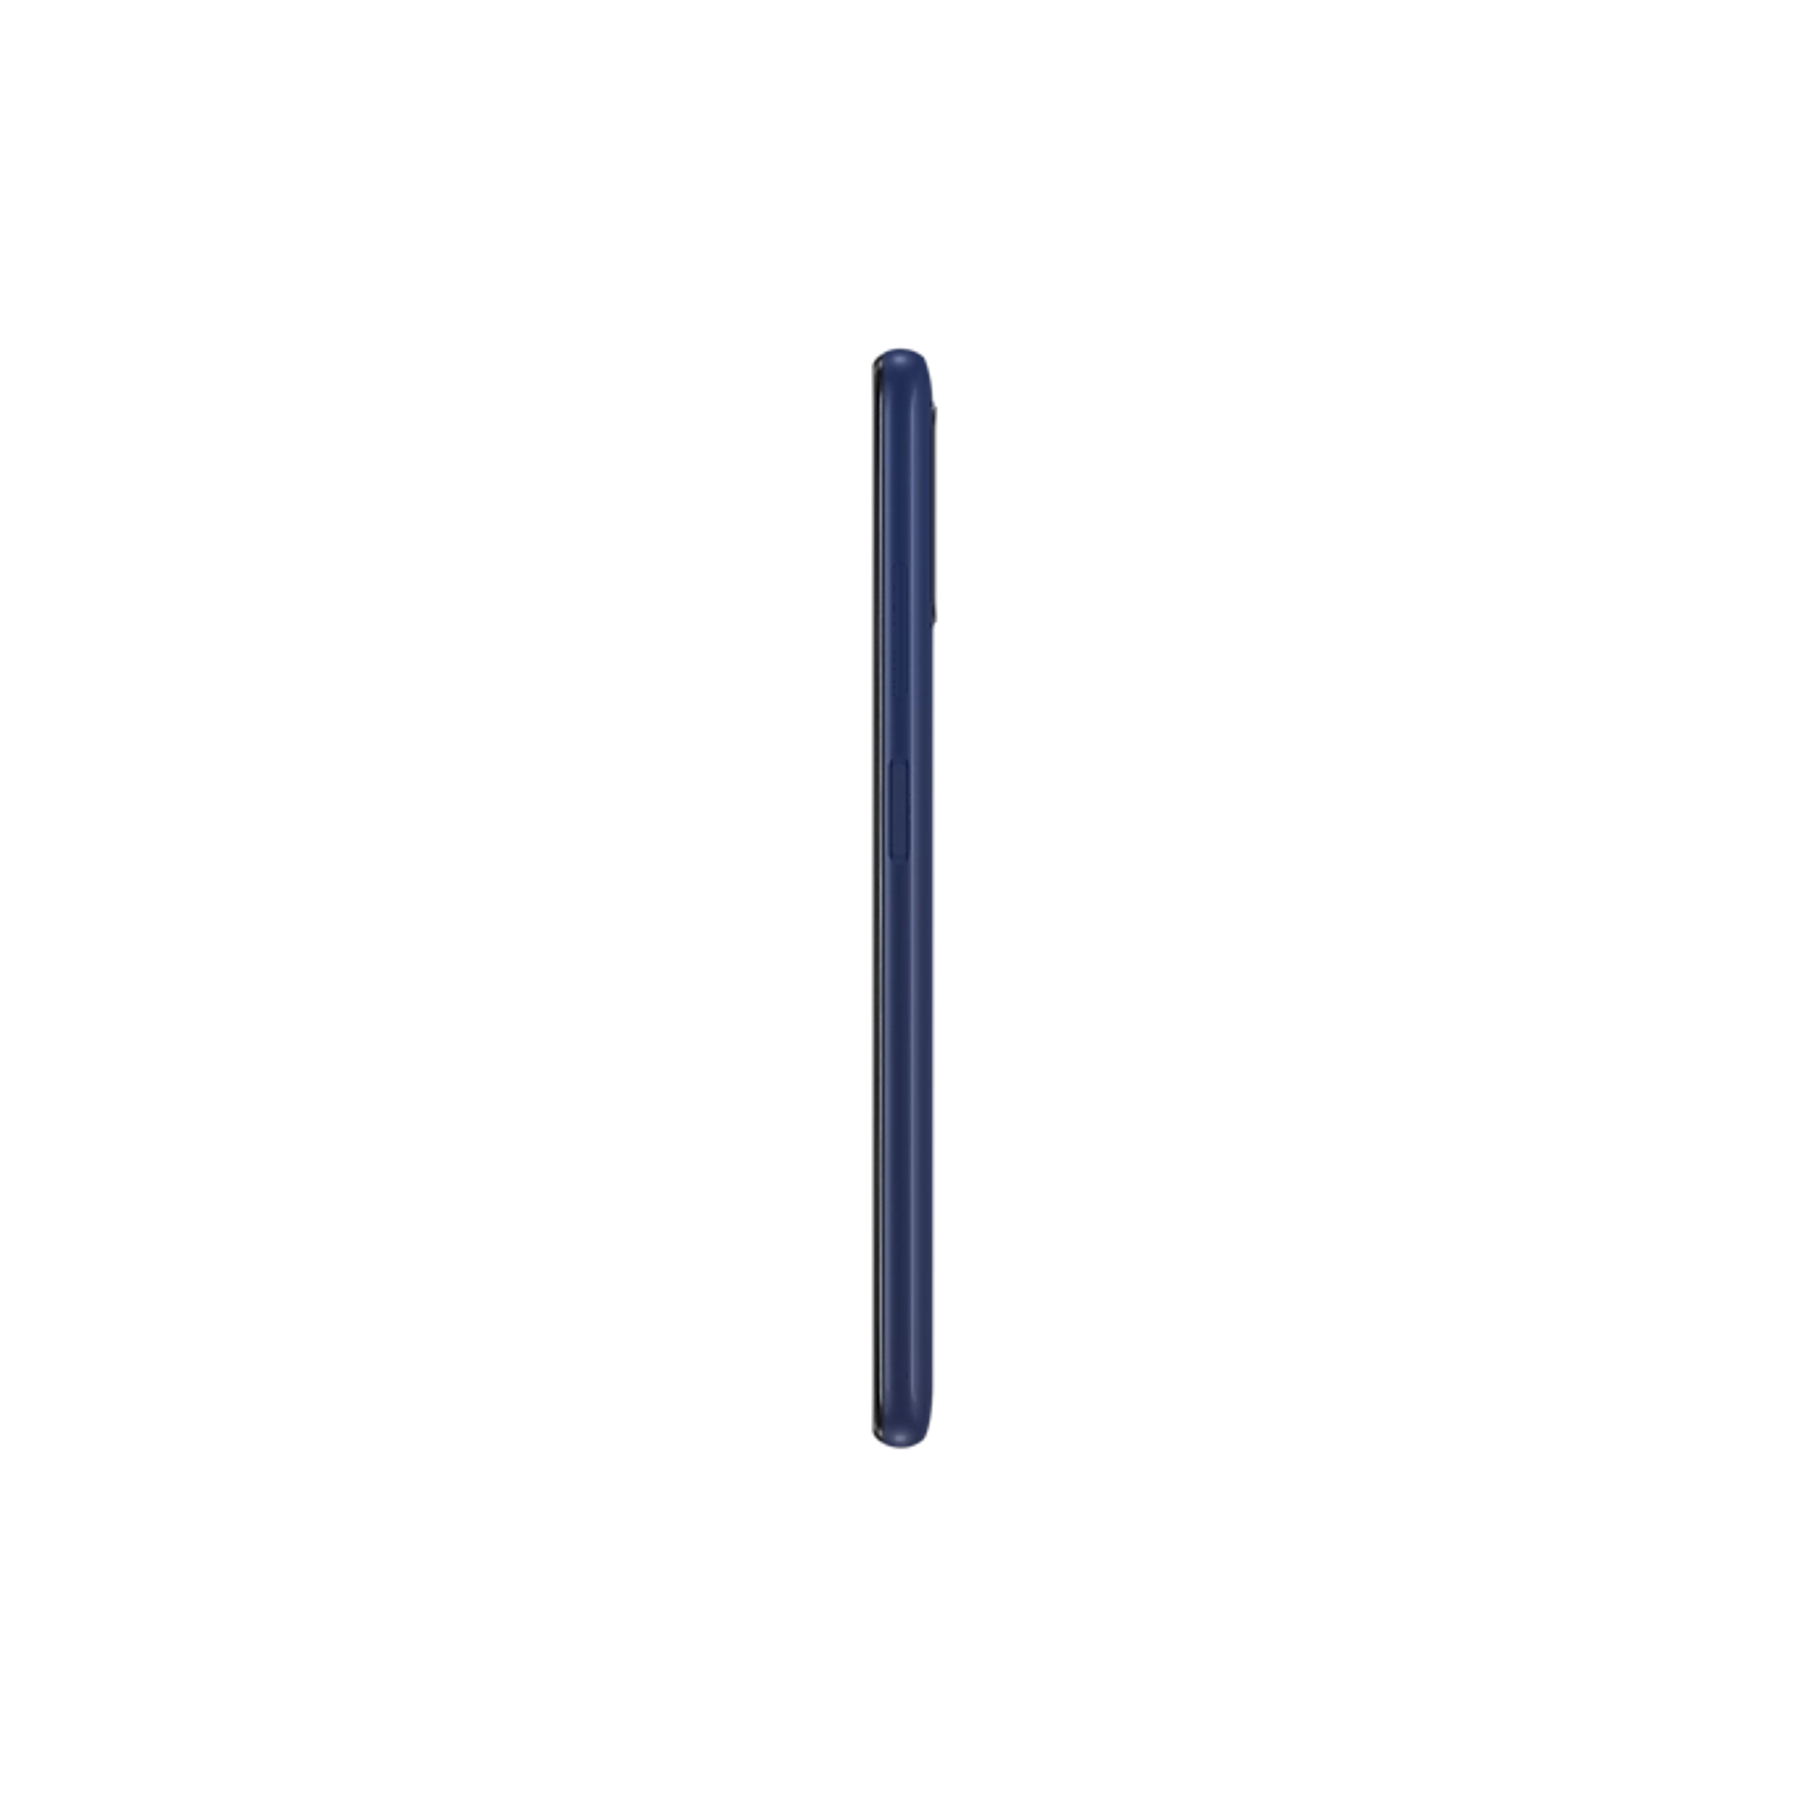 Galaxy A04s Blue Cell Phone 4GB 64GB 13MP